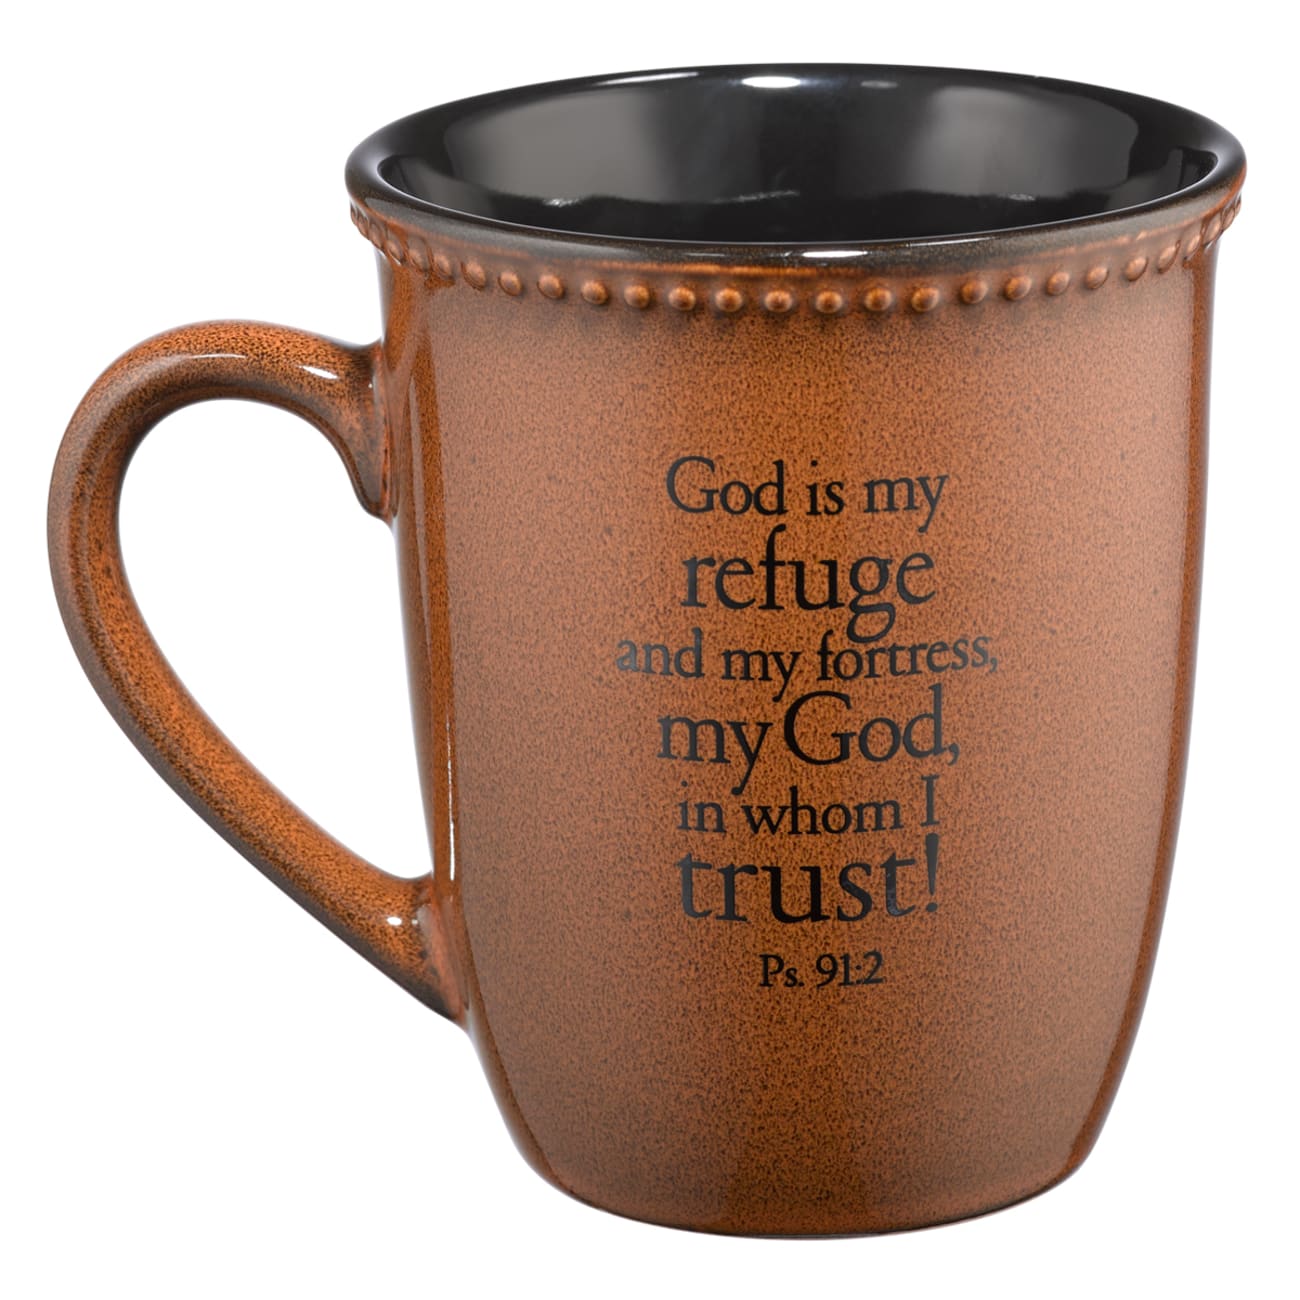 Mug Rimmed Glazed: Trust, Saddle Tan (Psalm 91:2) (384ml) Homeware